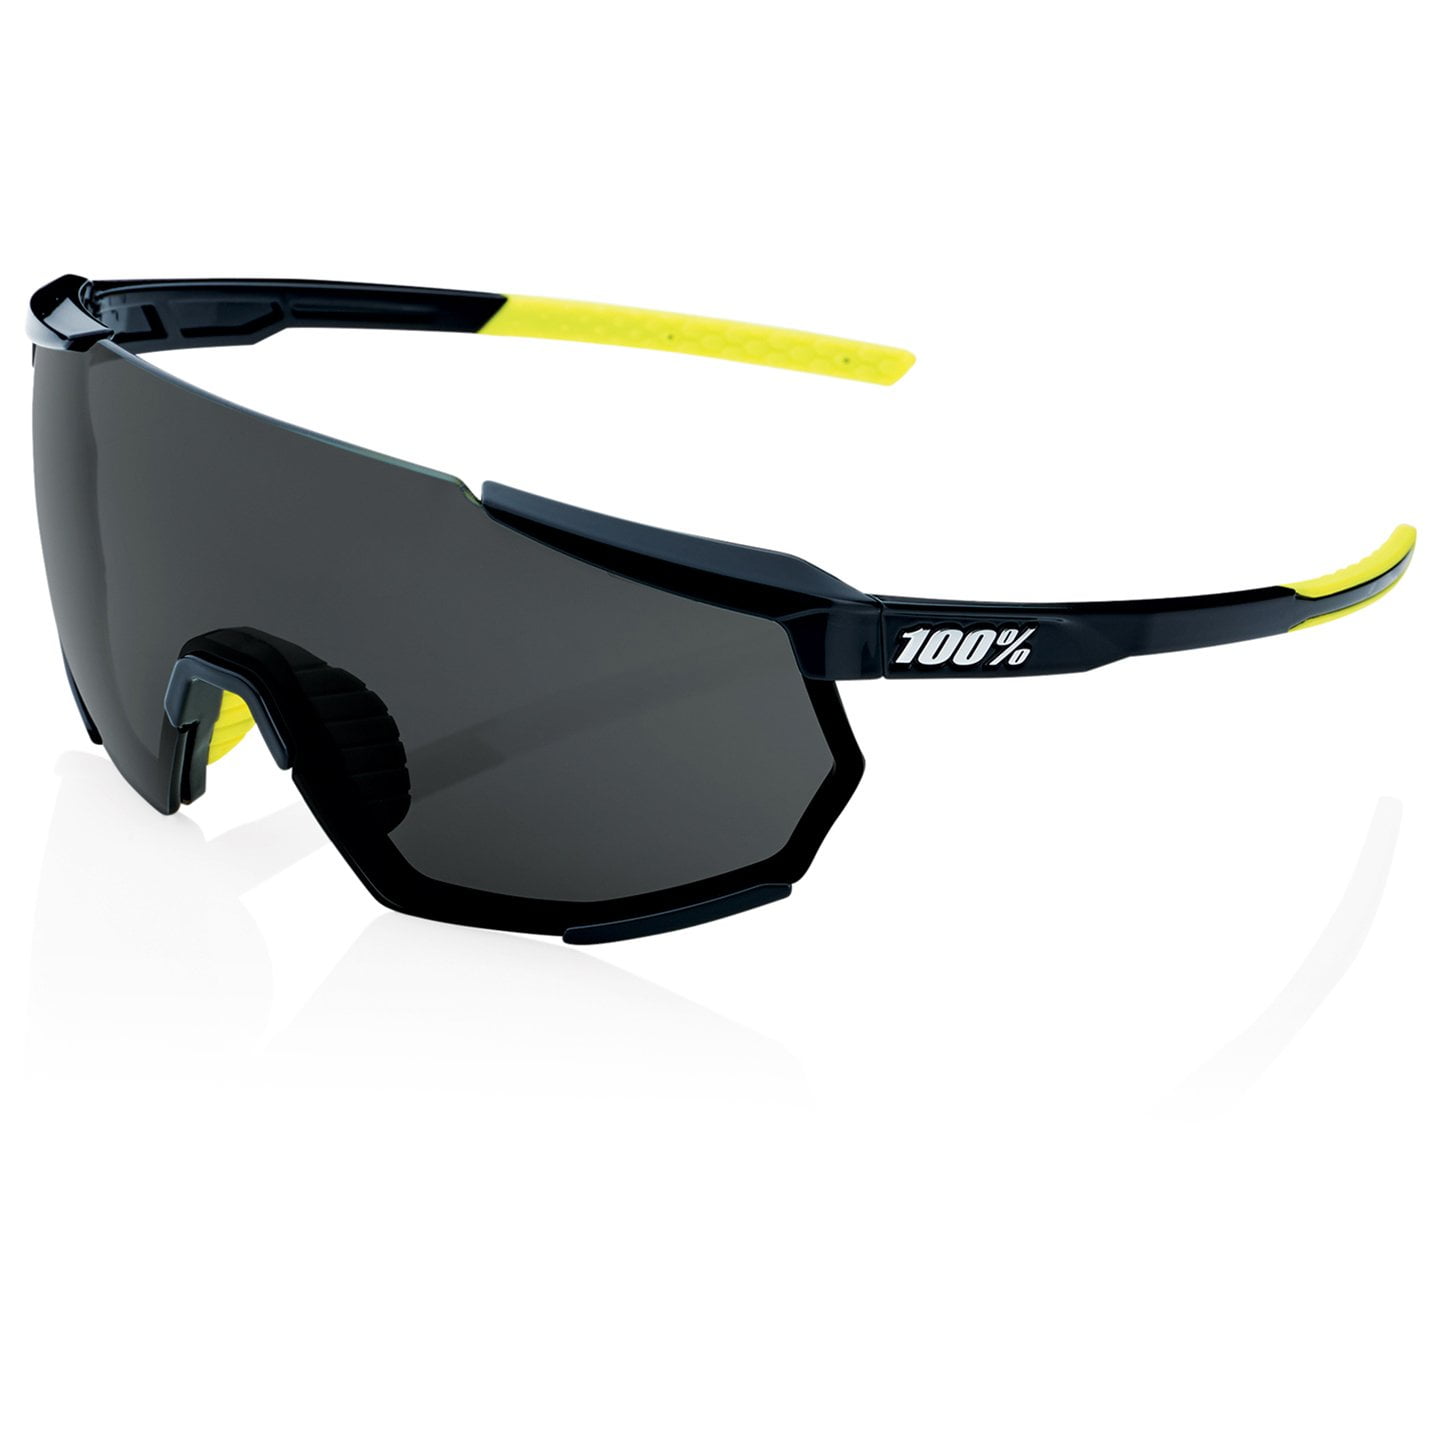 100% Racetrap 3.0 Eyewear Set Glasses, Unisex (women / men), Cycle glasses, Road bike accessories